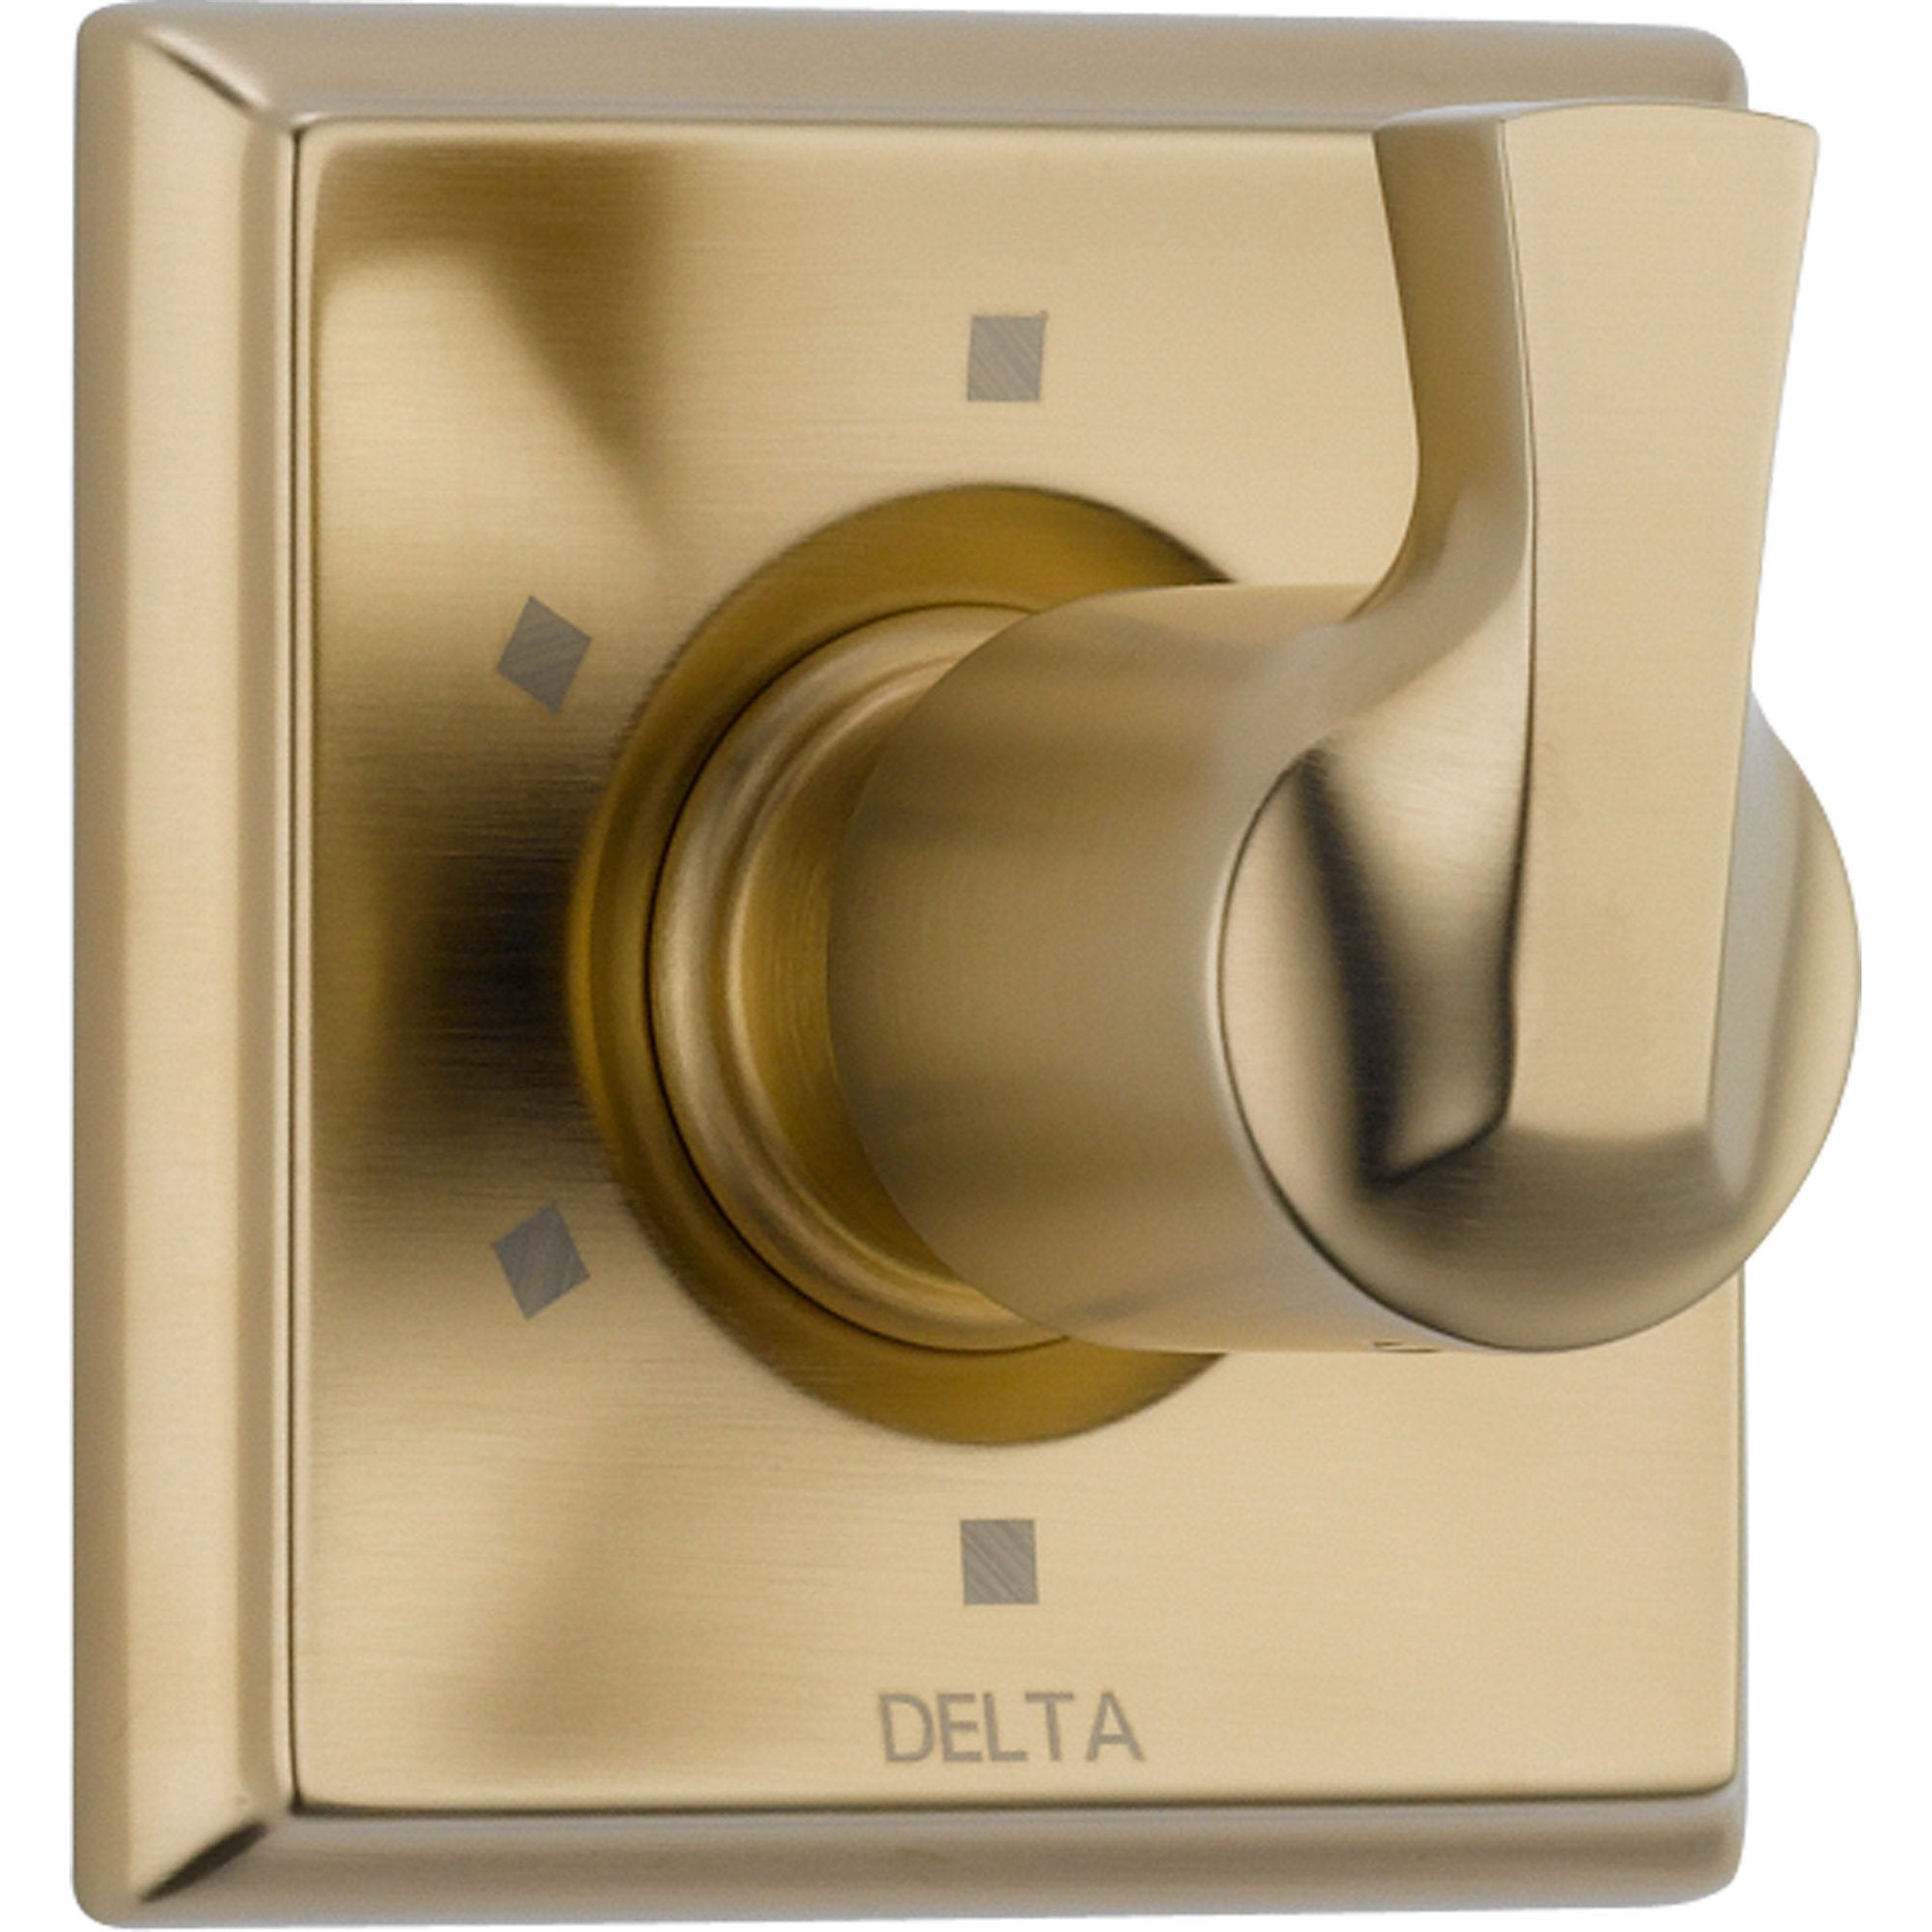 Delta 6-Setting Champagne Bronze Single Handle Shower Diverter Trim Kit 555994